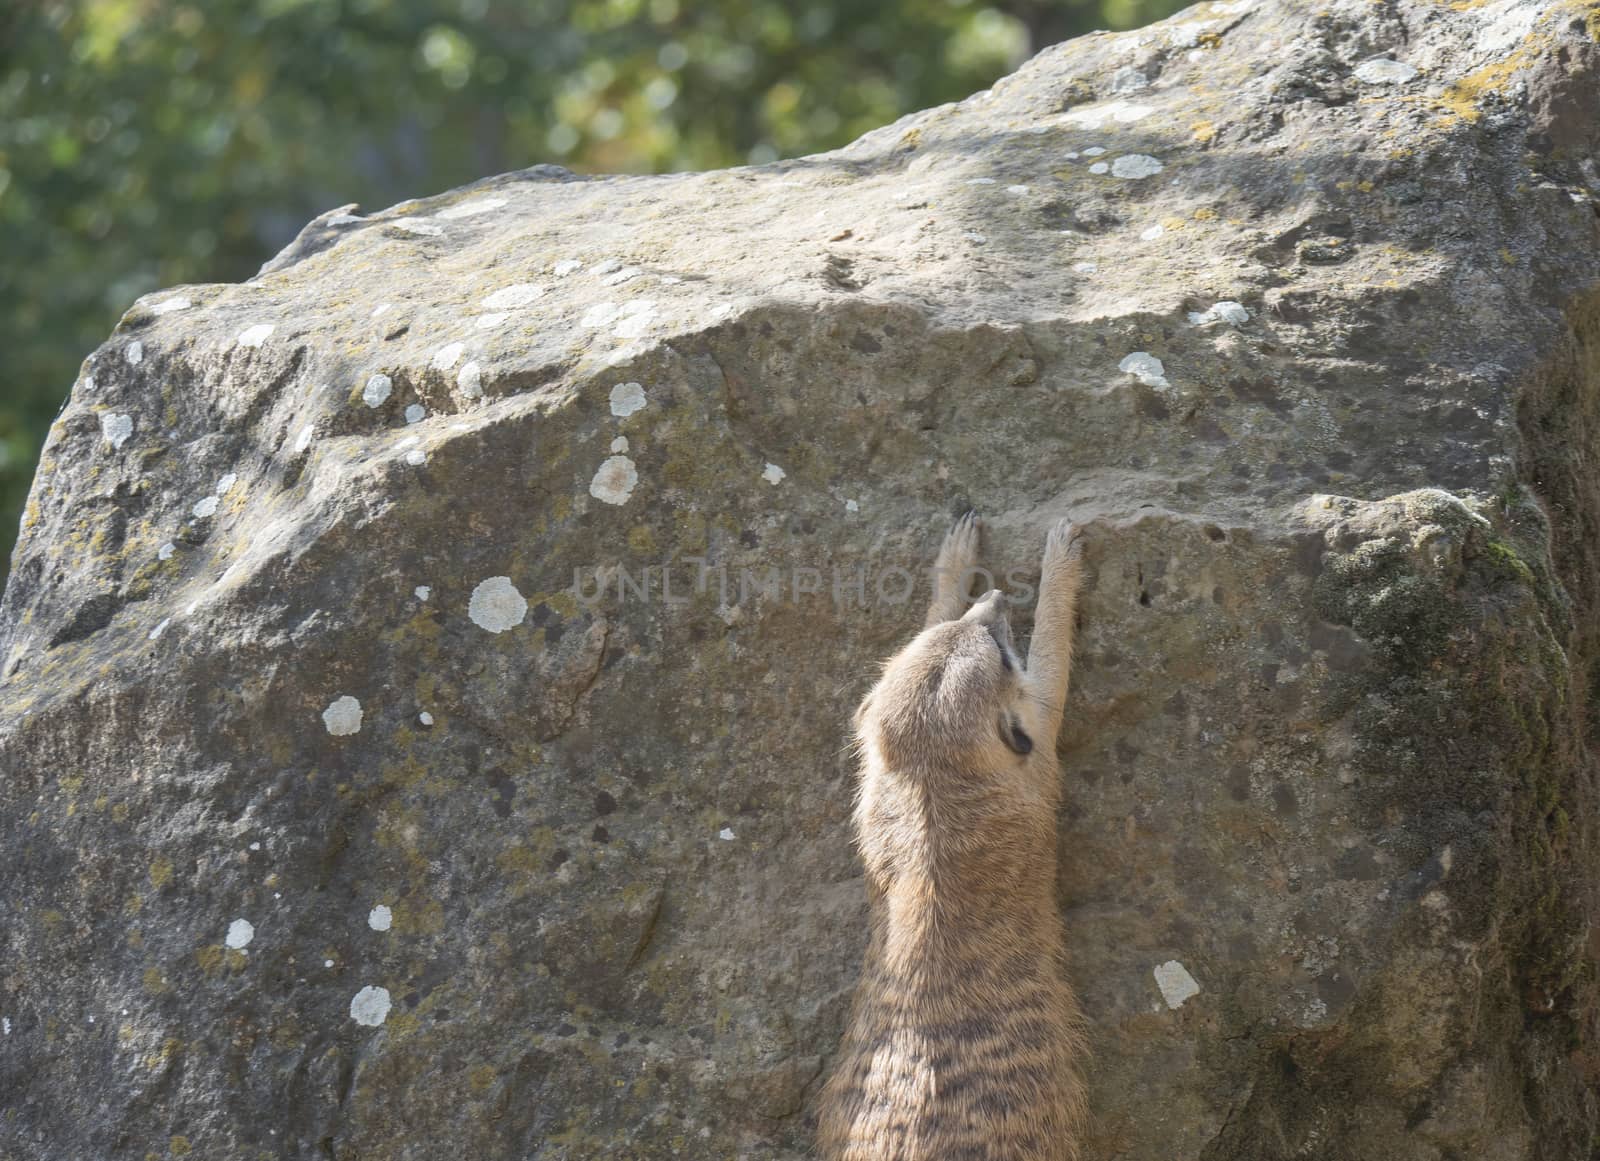 Meerkat or suricate, Suricata suricatta climbing on the roxk stone, selective focus, copy space for text by Henkeova